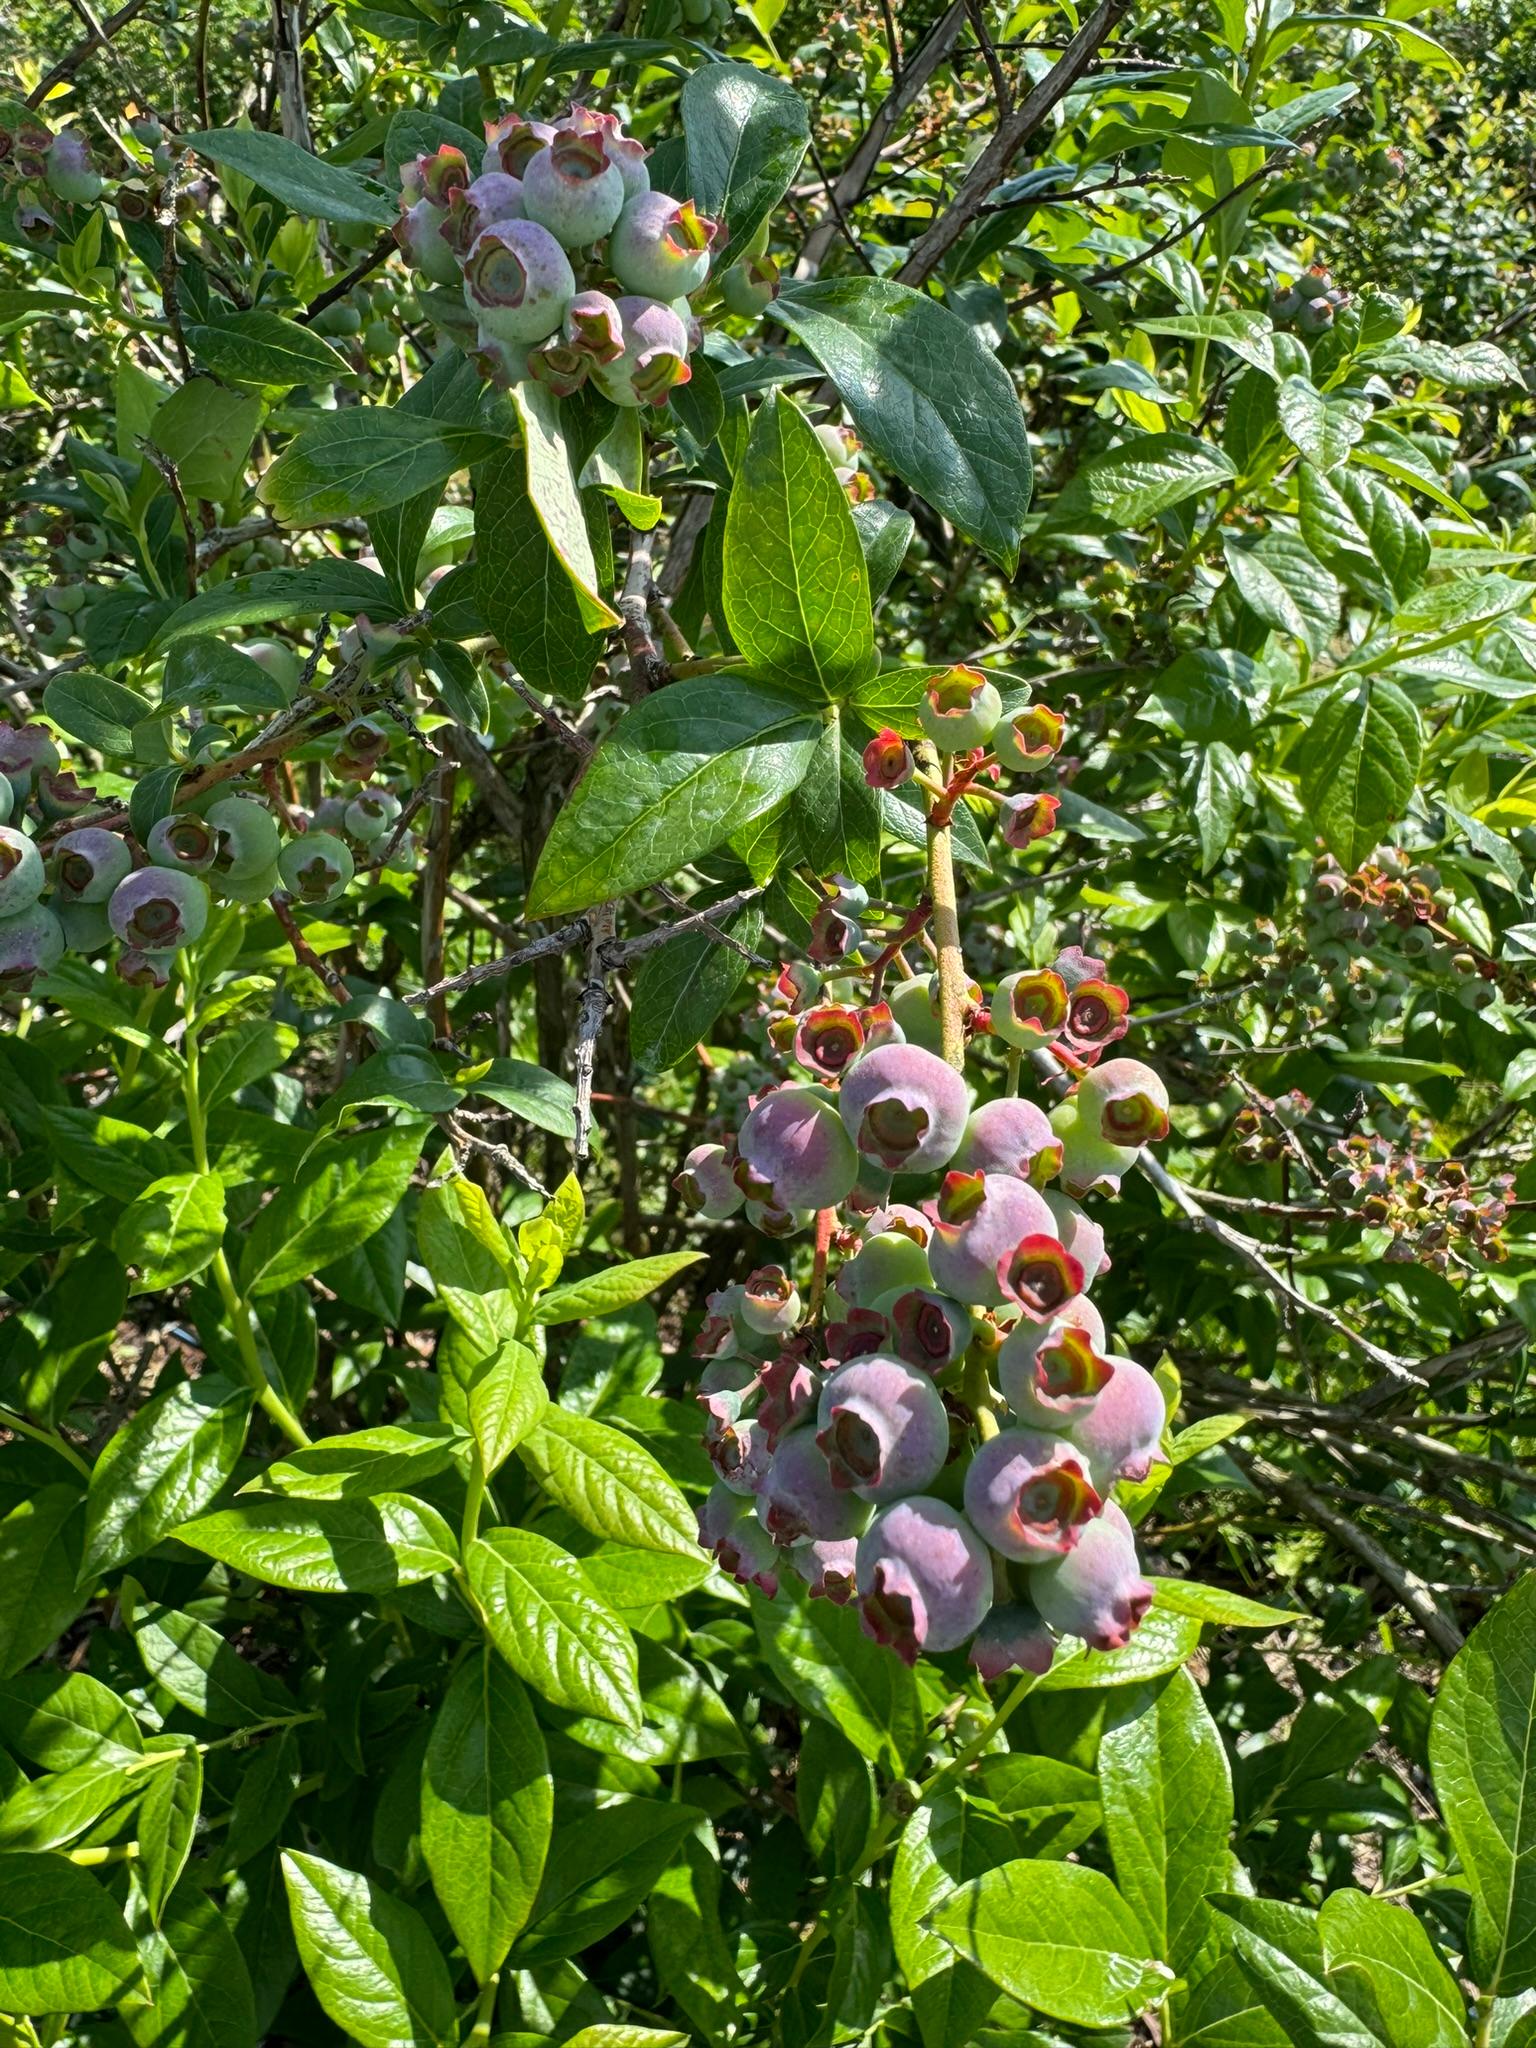 Blueberries on a bush.